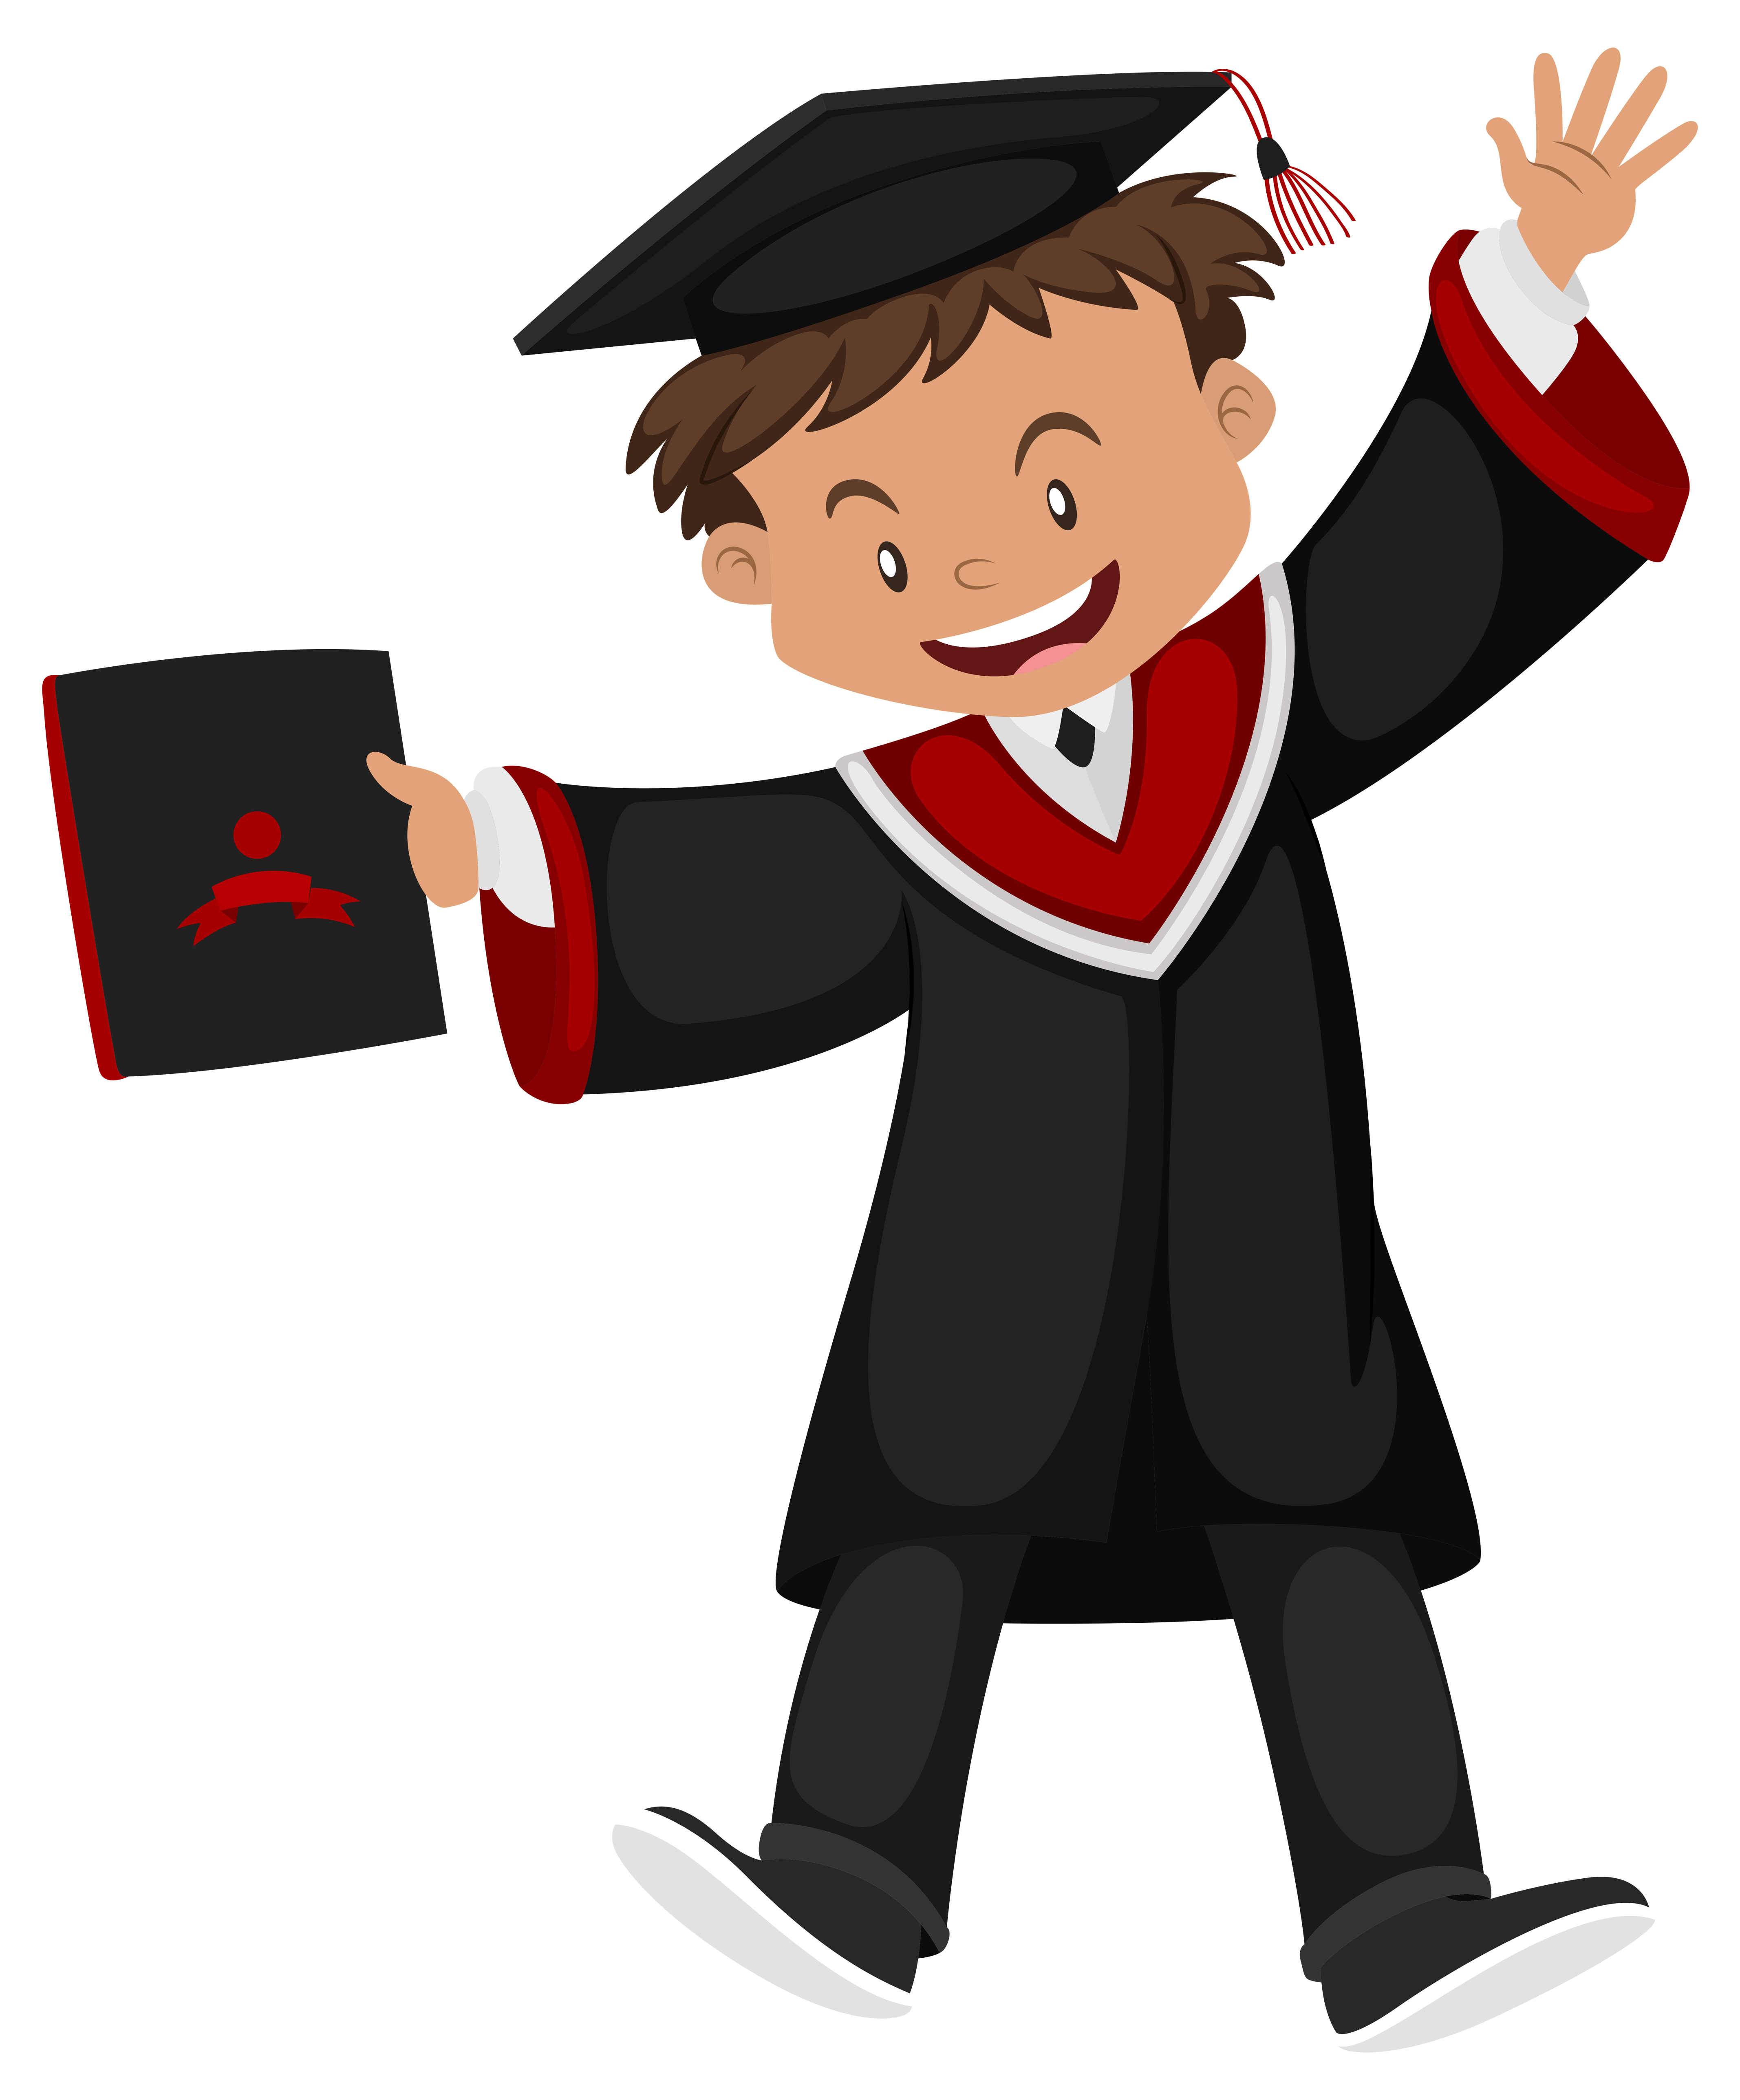 Download Man in black graduation gown with cap - Download Free Vectors, Clipart Graphics & Vector Art